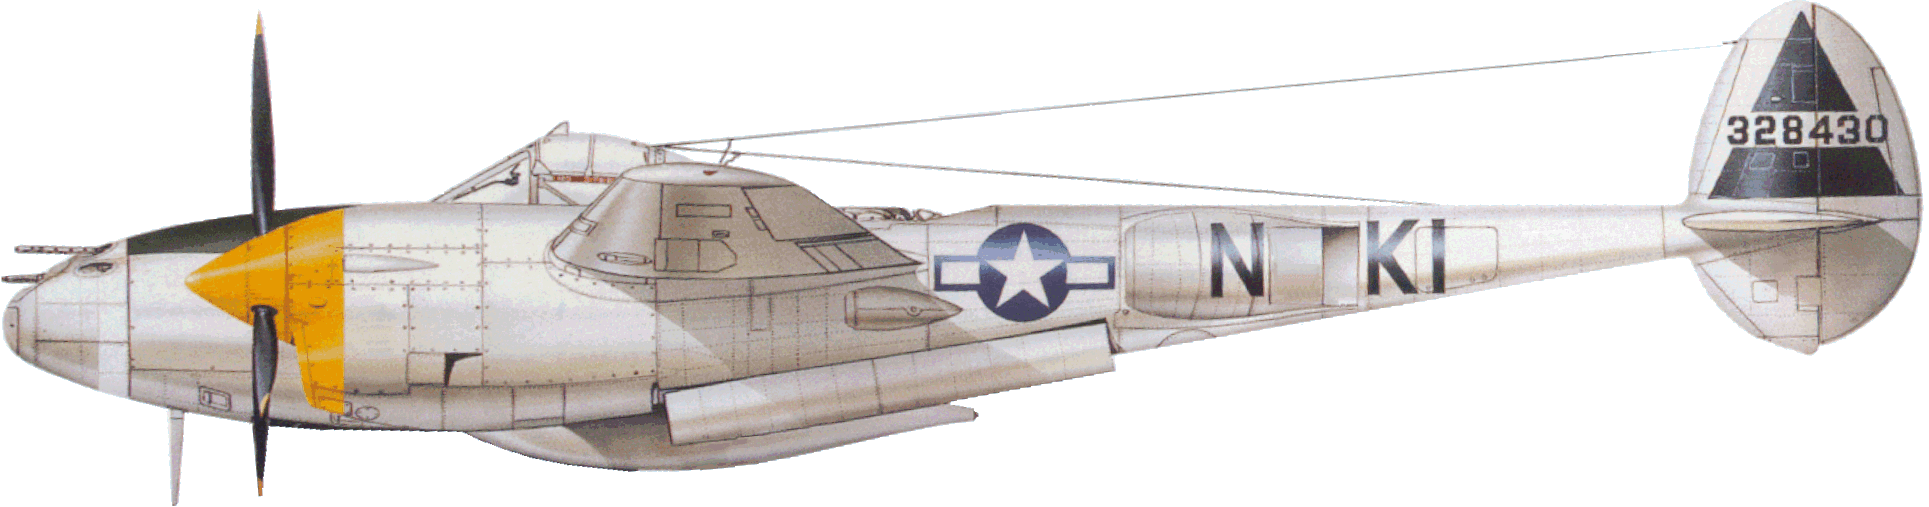 Lockheed P-38 Lighting fighter plane of WWII